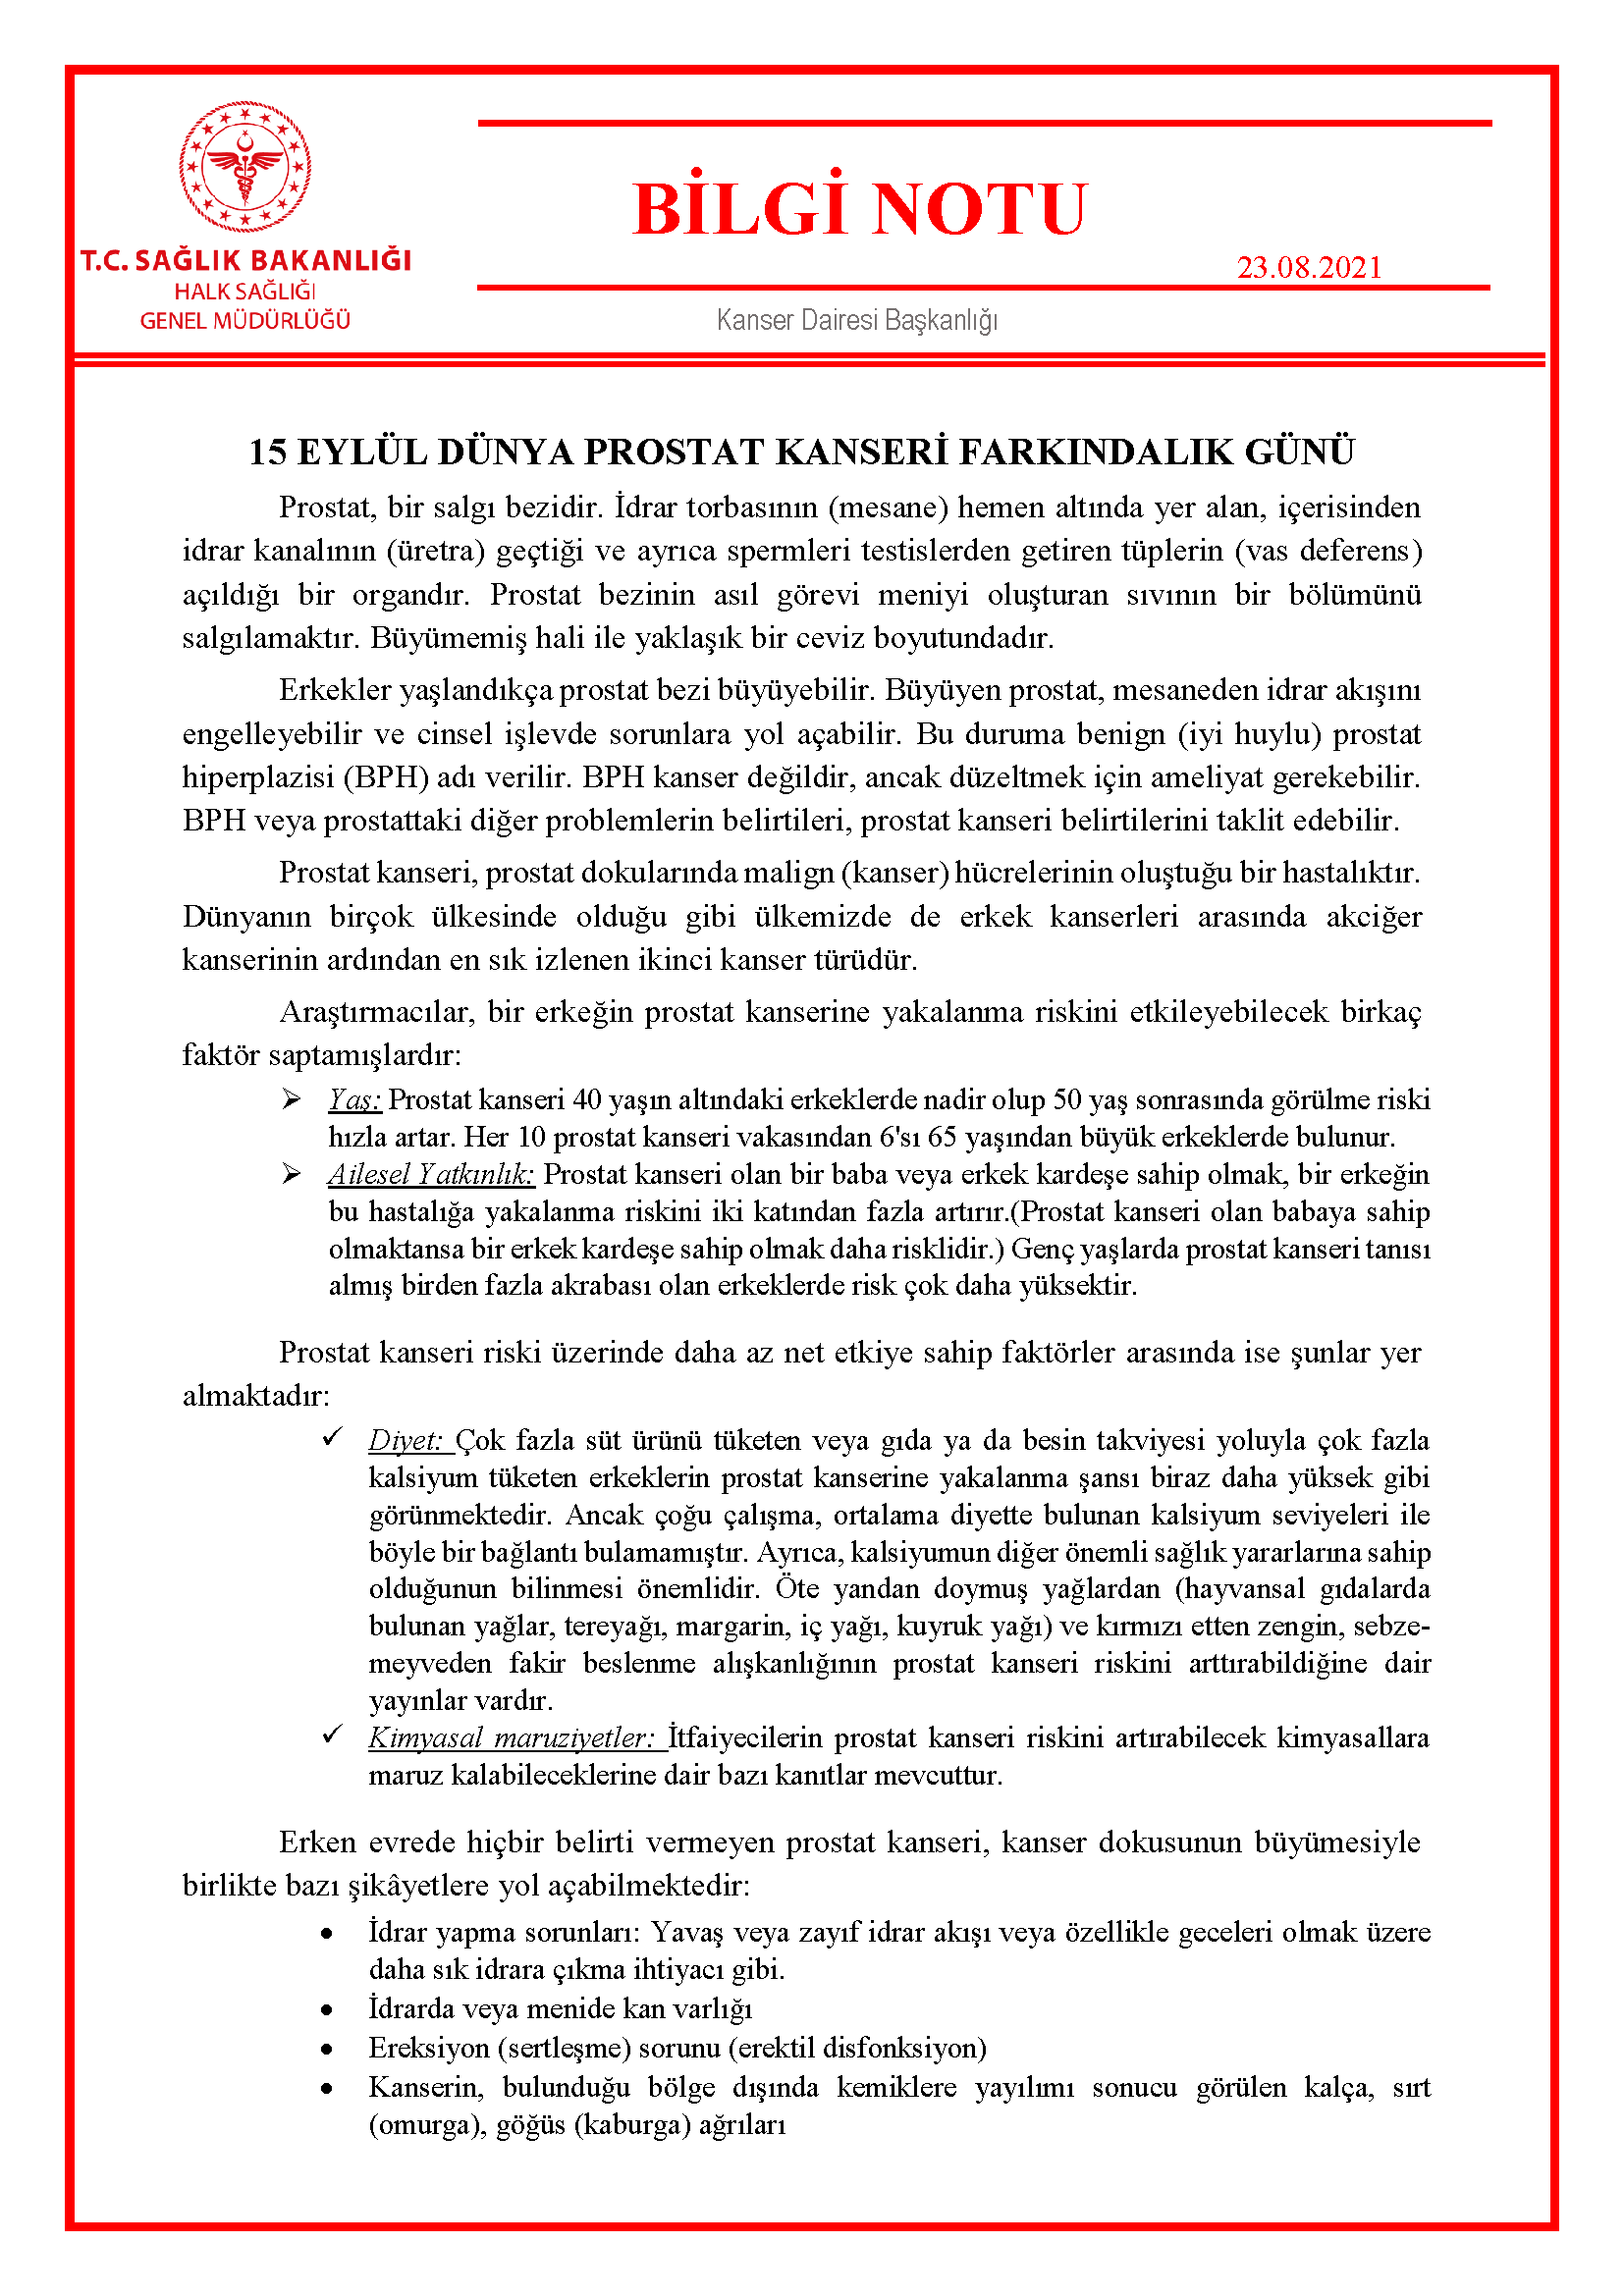 PROSTAT KANSERİ FARKINDALIK NOTU HSGM_Sayfa_1.png